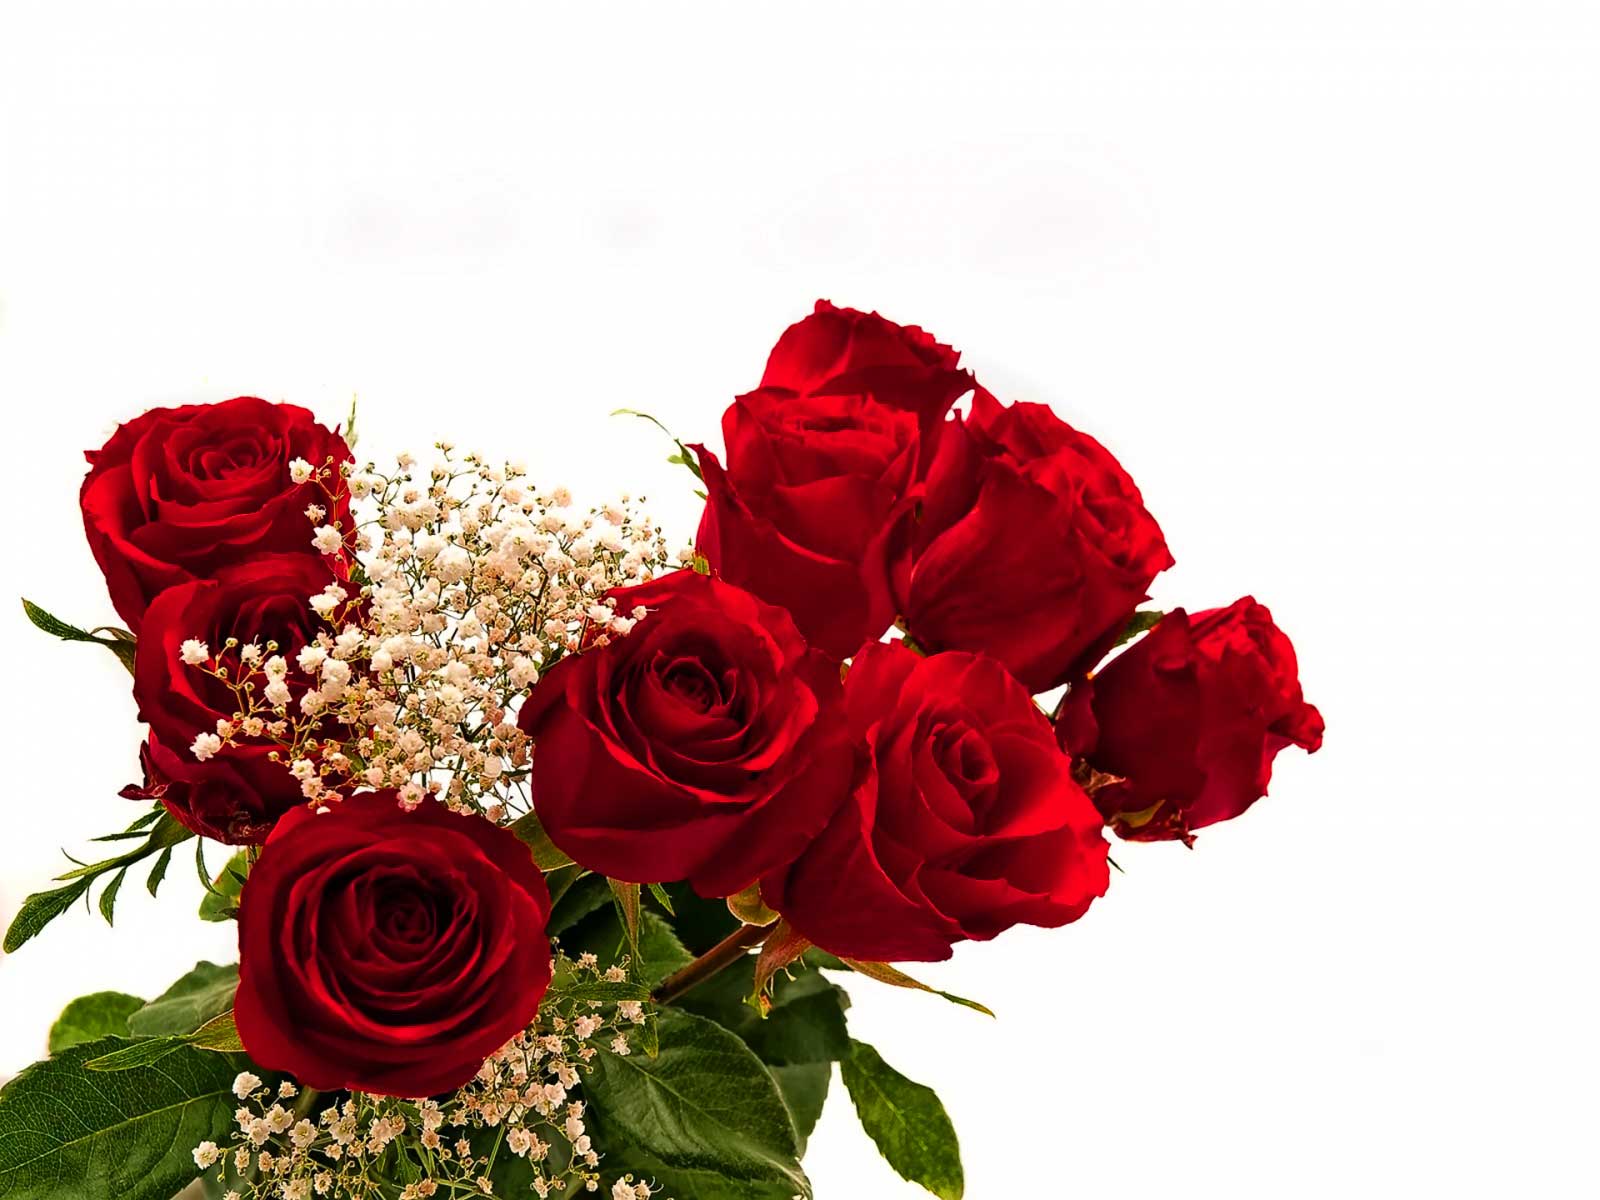 Most Rose Flower Bouquet Wallpaper Desktop High Quality For Pc Stock